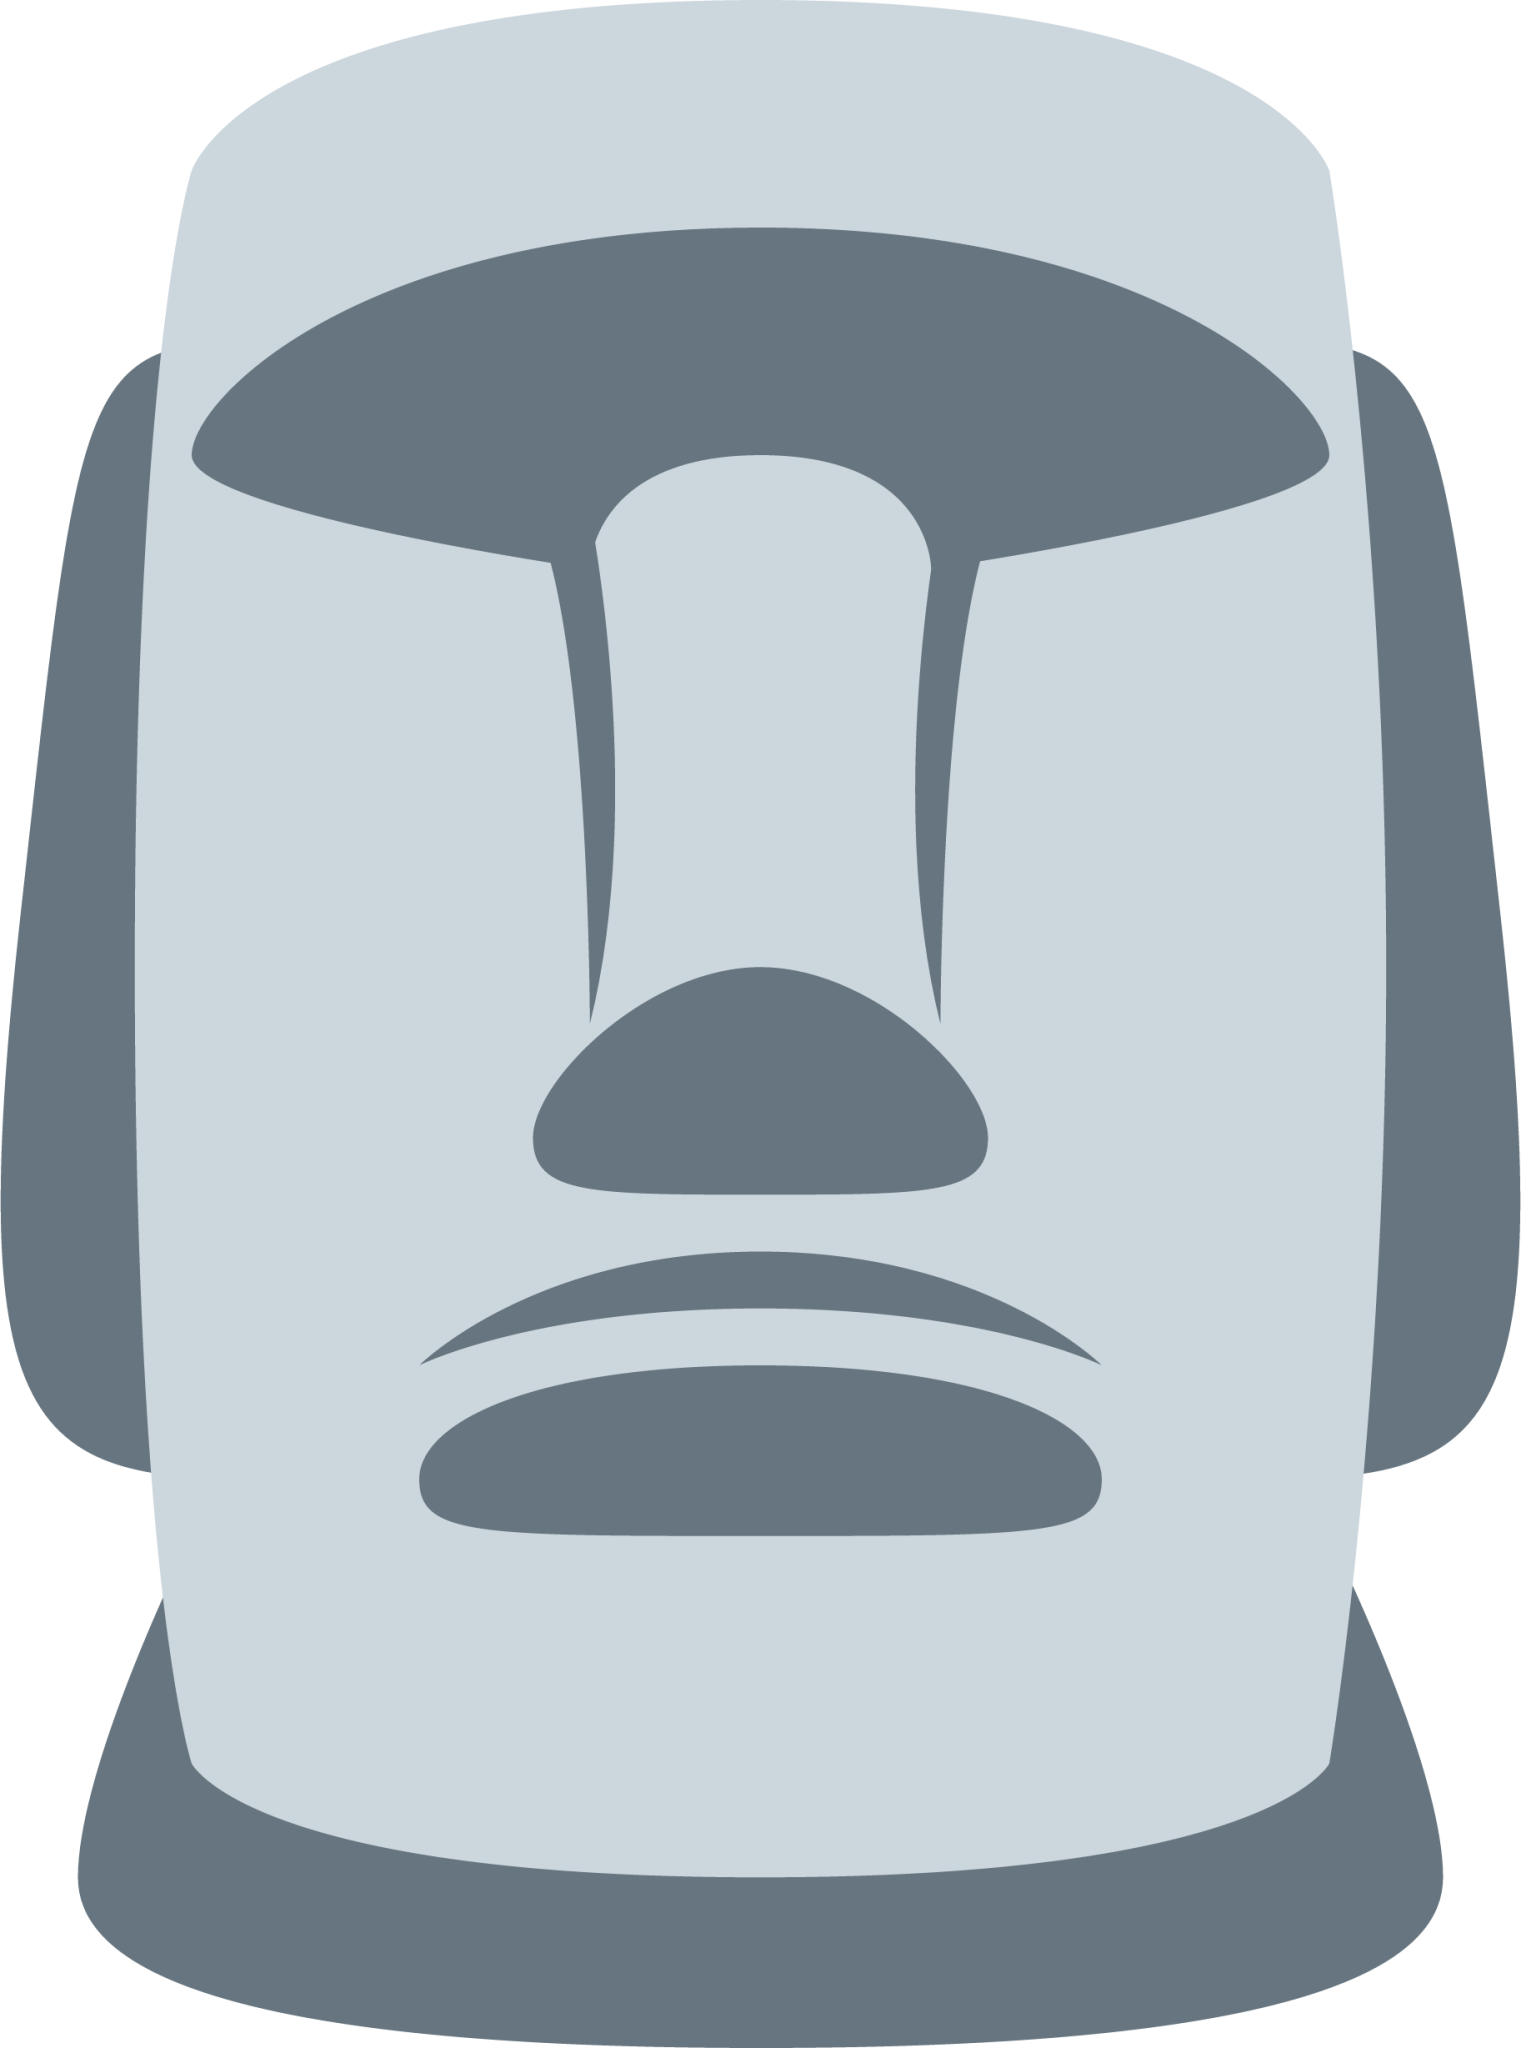 Wtheck *Moai emoji* by rayna12313 on DeviantArt